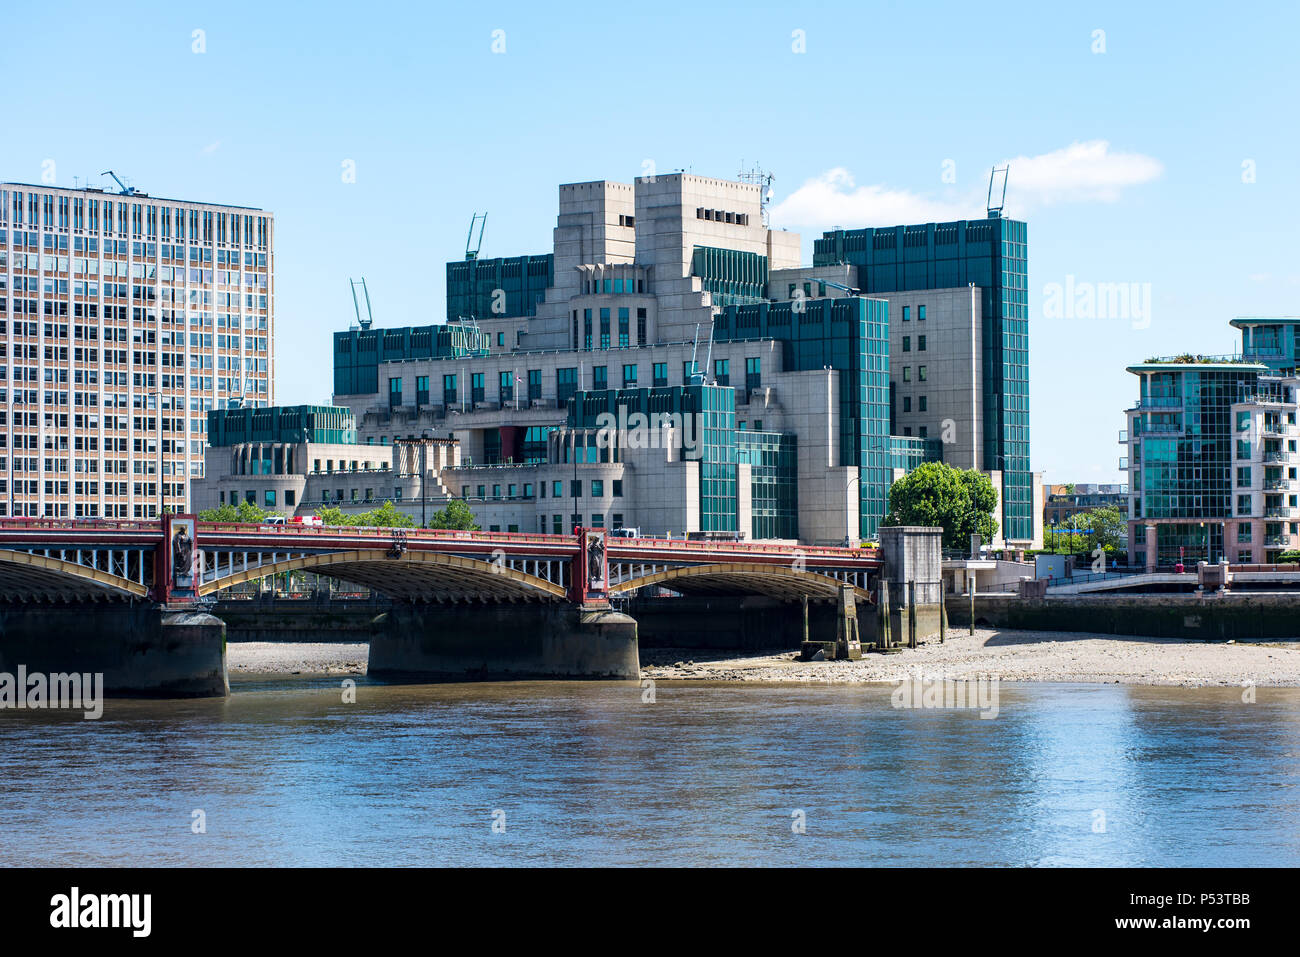 LONDON, UK - 18JUN2018: The SIS Building at Albert Embankment, Vauxhall is the headquarters of MI6. Viewed from Vauxhall Bridge. Stock Photo